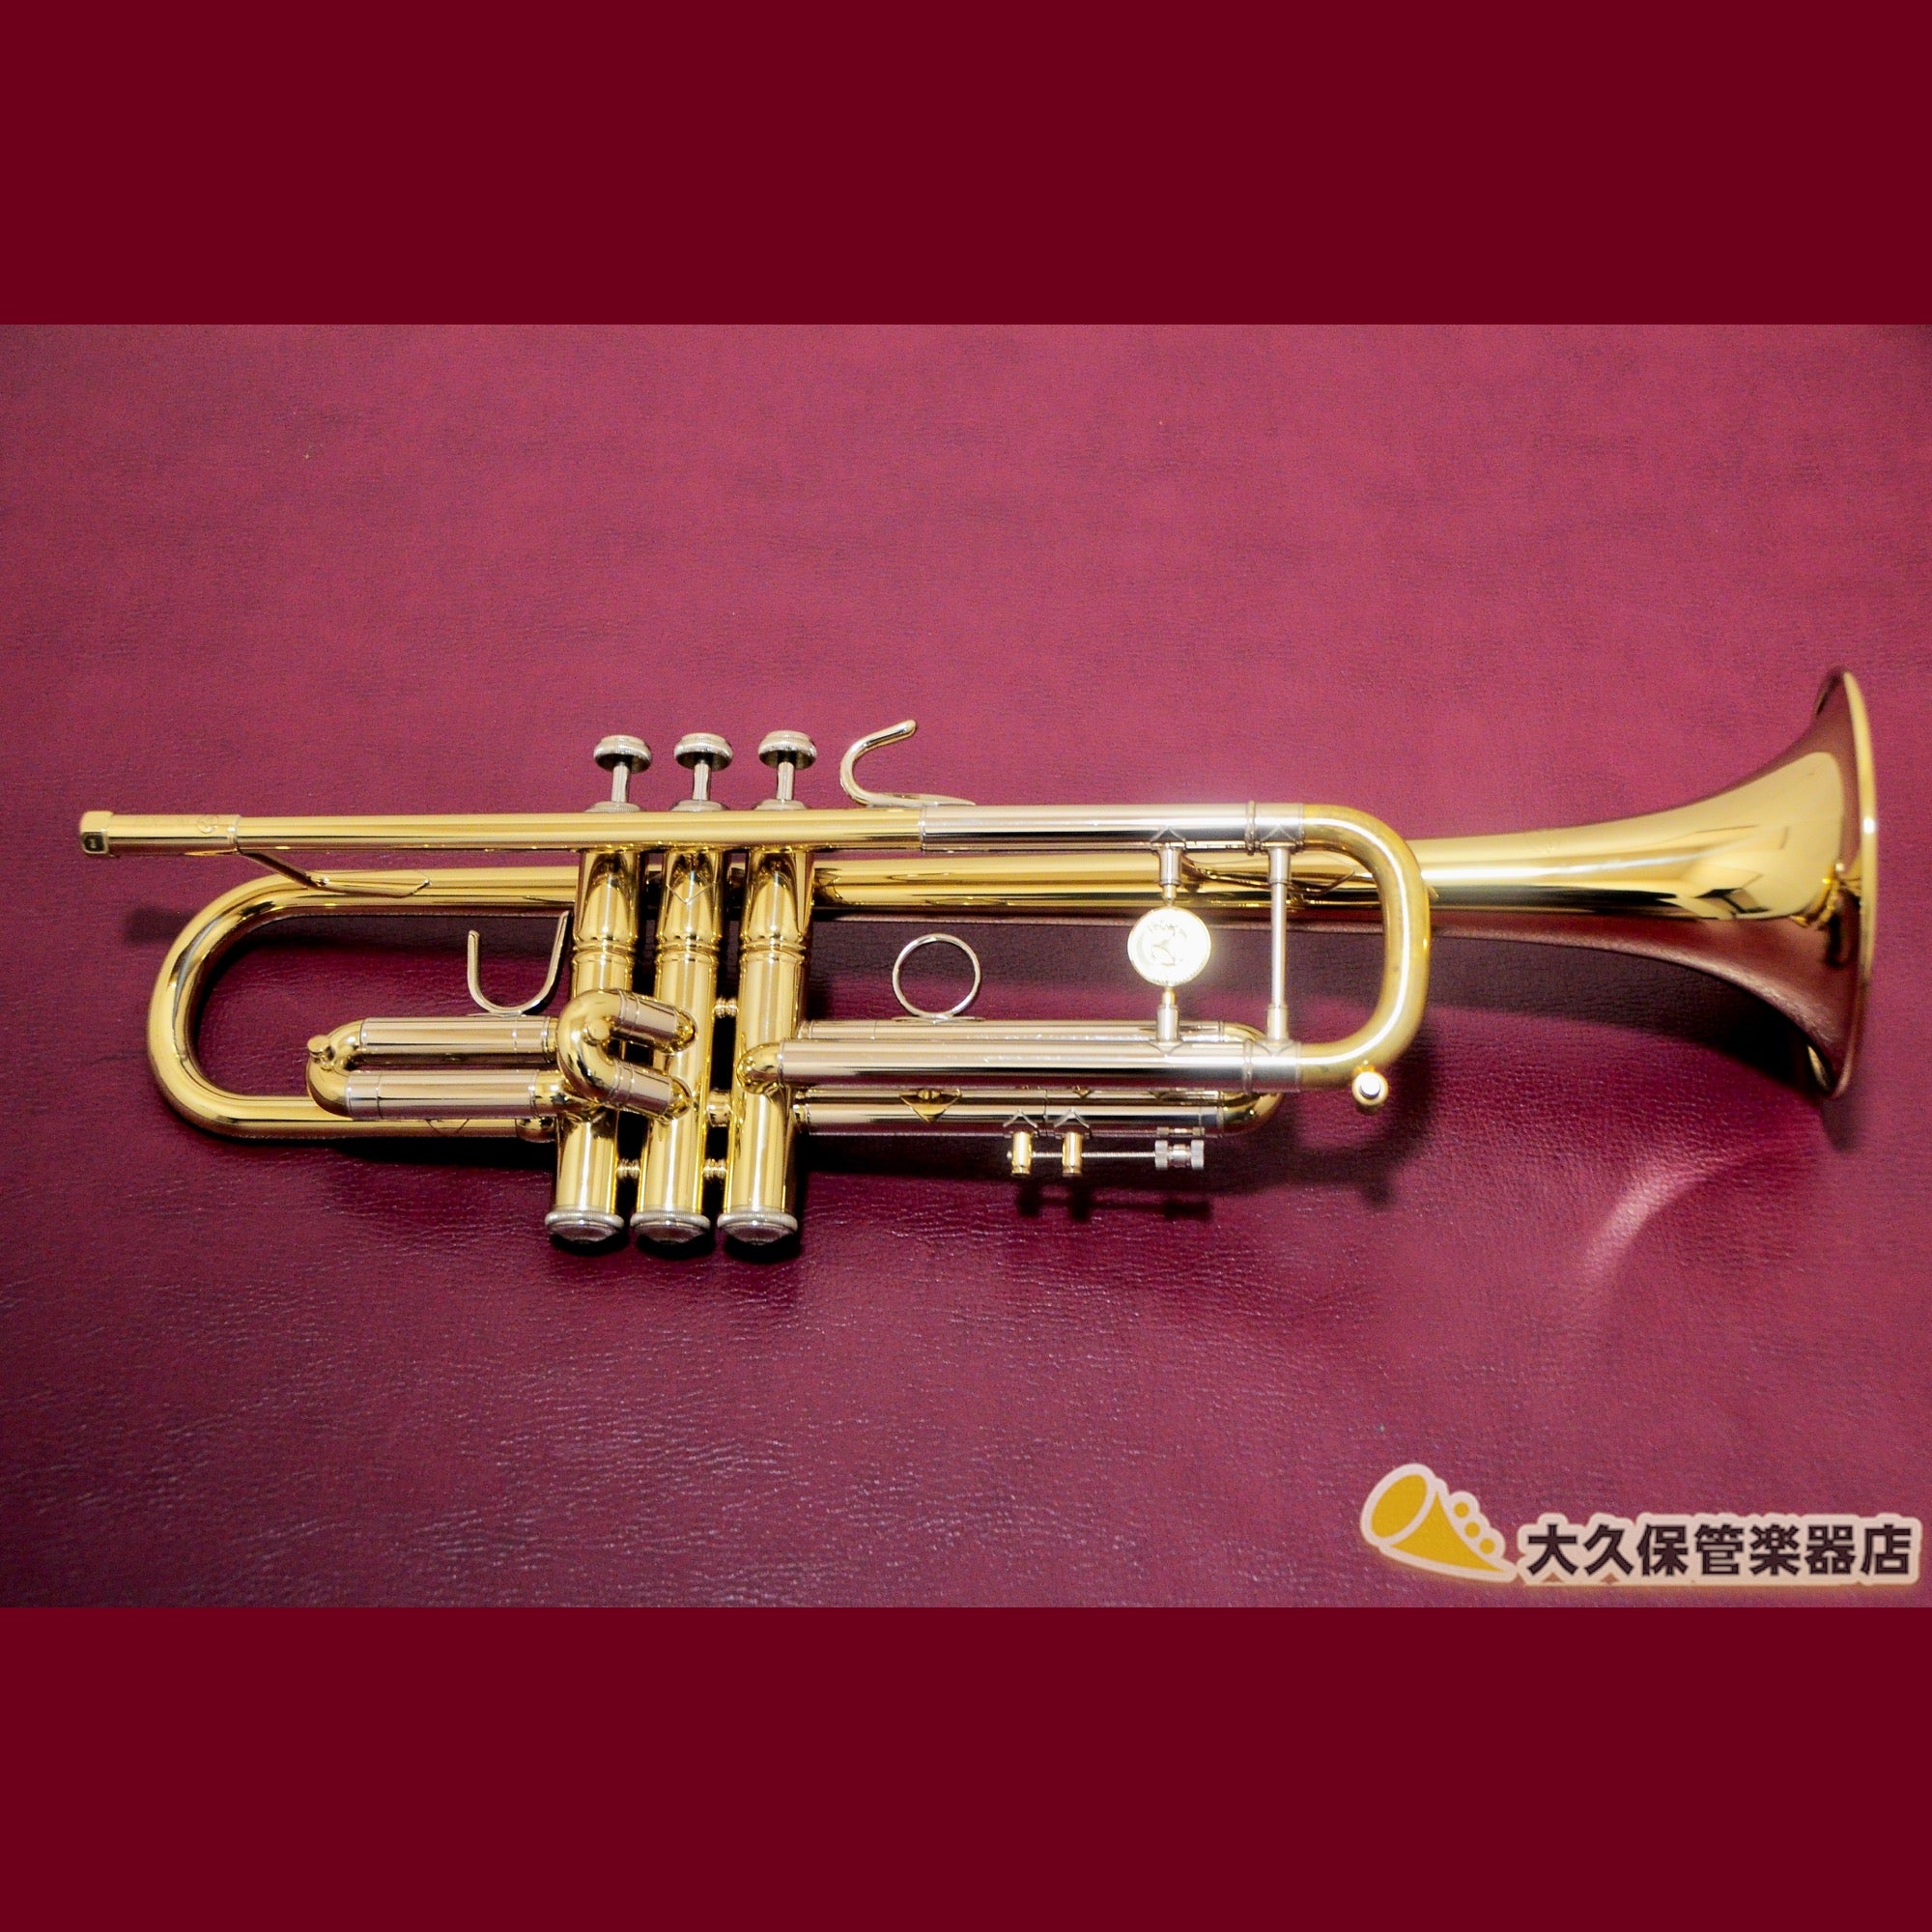 Bach バック トランペット MLV Stradivarius 72ベル - 楽器、器材